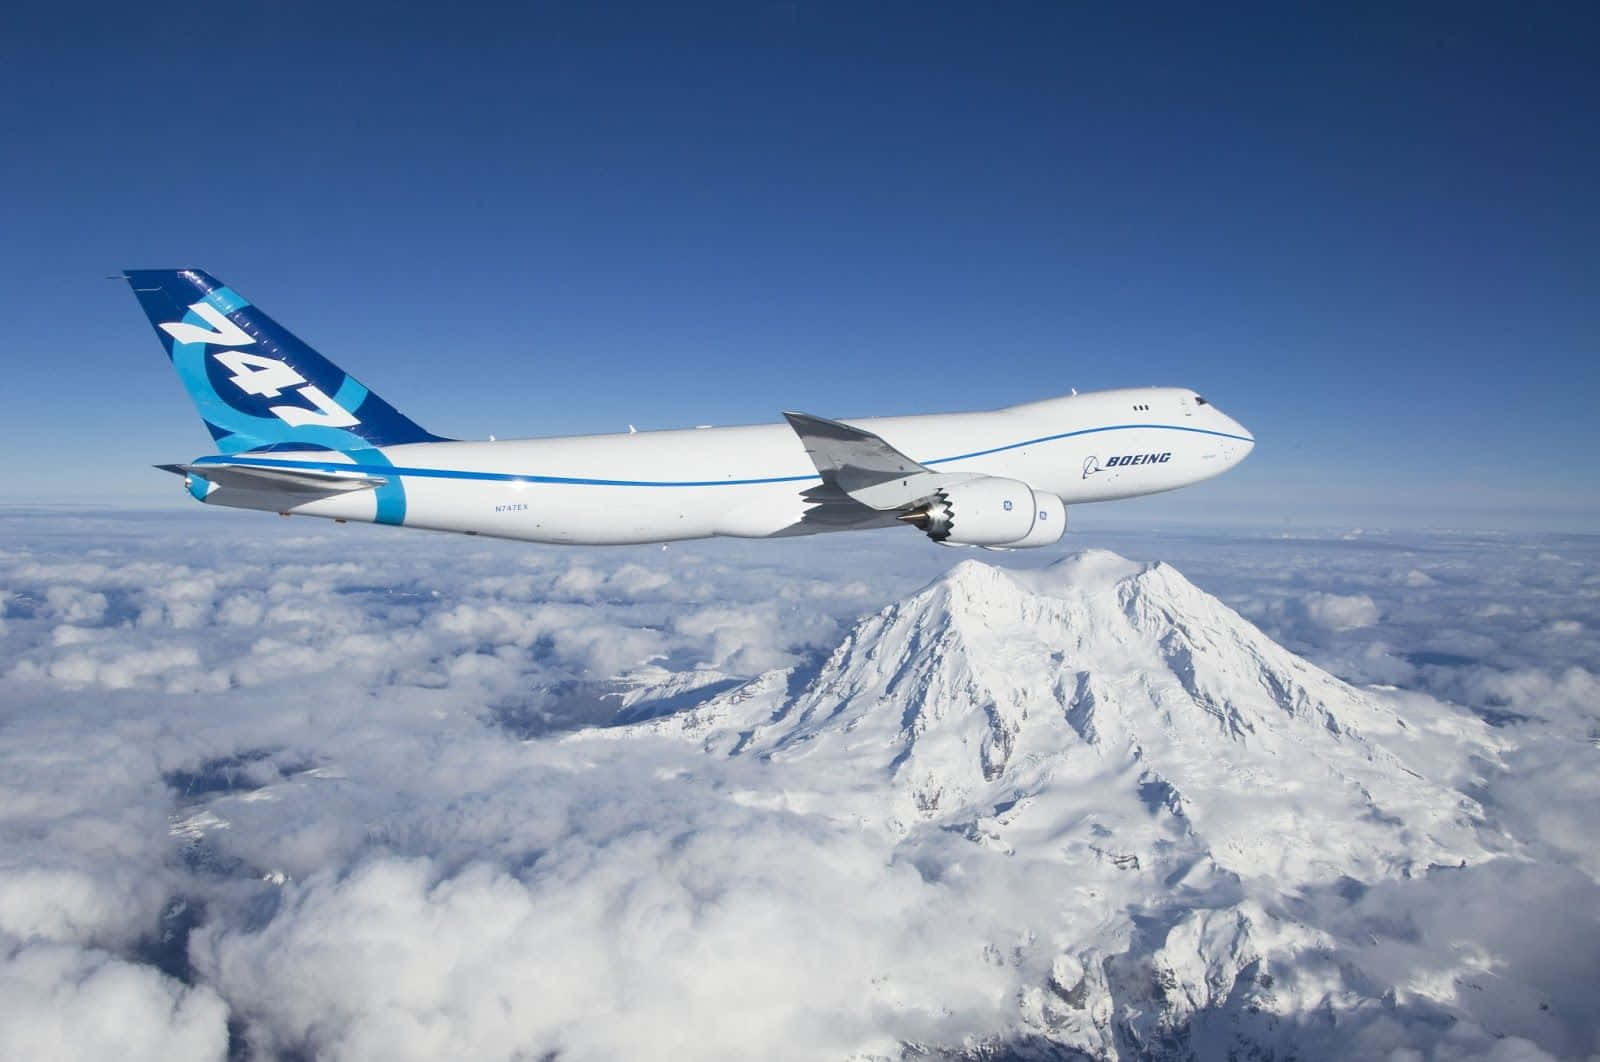 747 Airplane Over Ridges